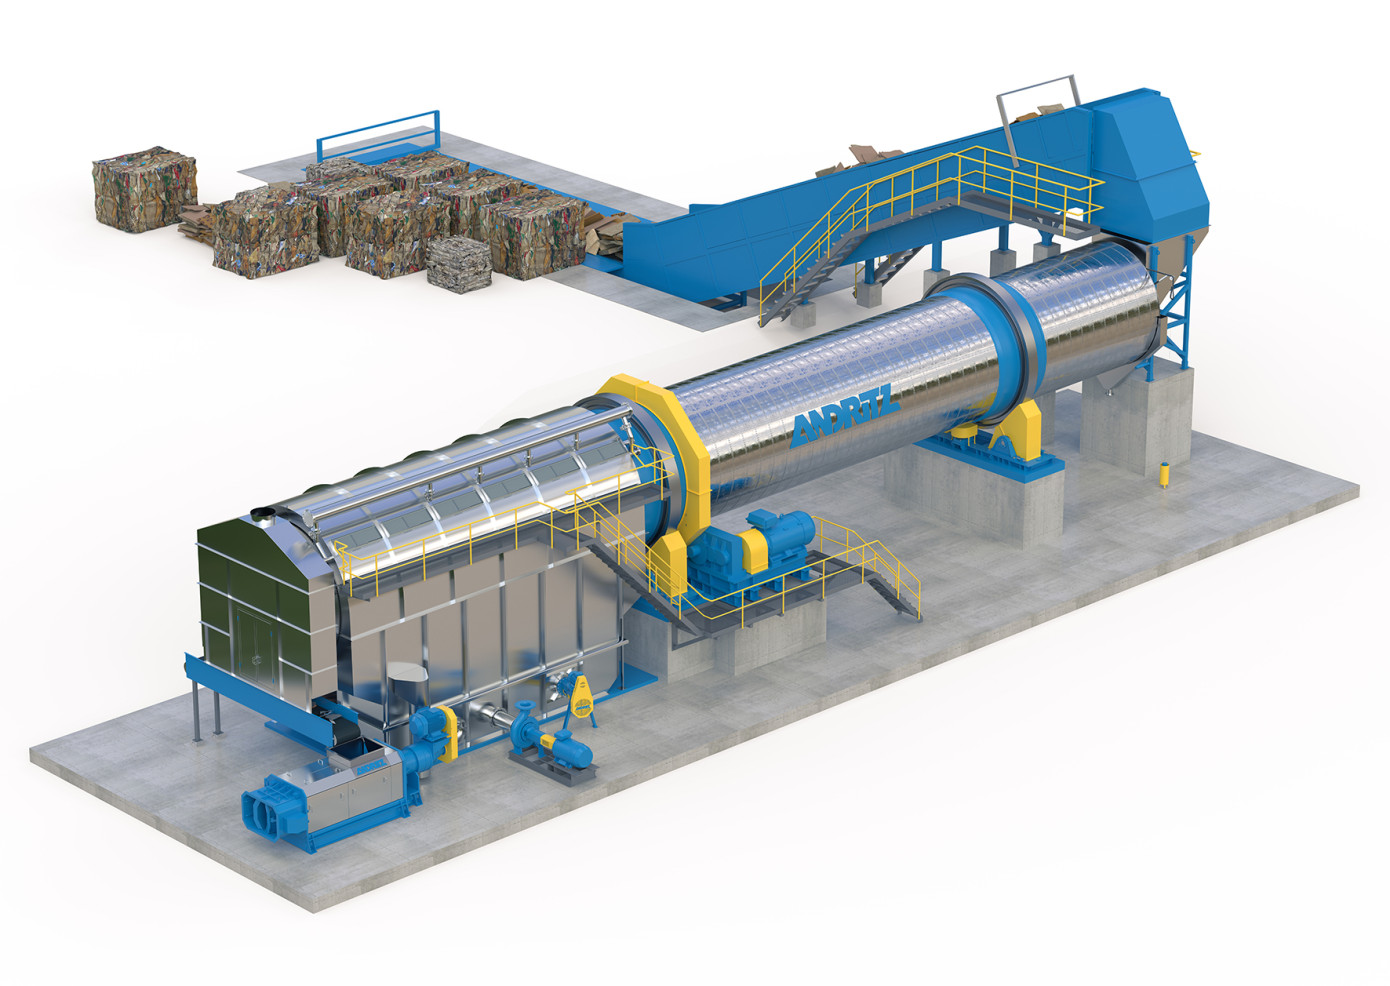 Pabrik Kertas to increase corrugated container lines capacity at Surabaya mill in Indonesia